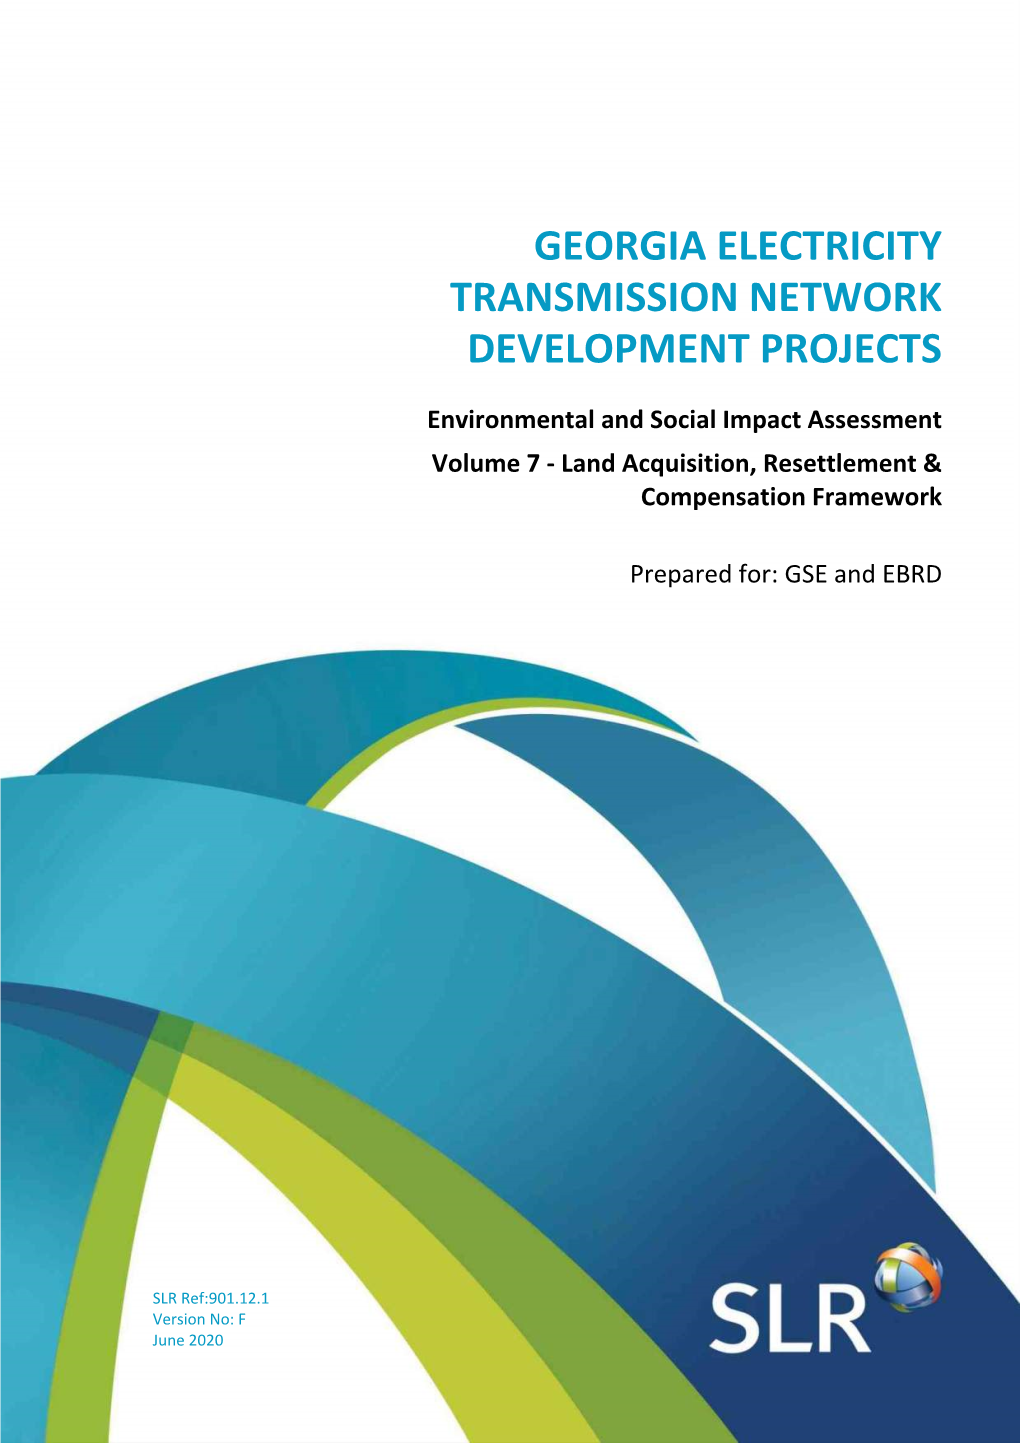 Environmental and Social Impact Assessment, Volume 7